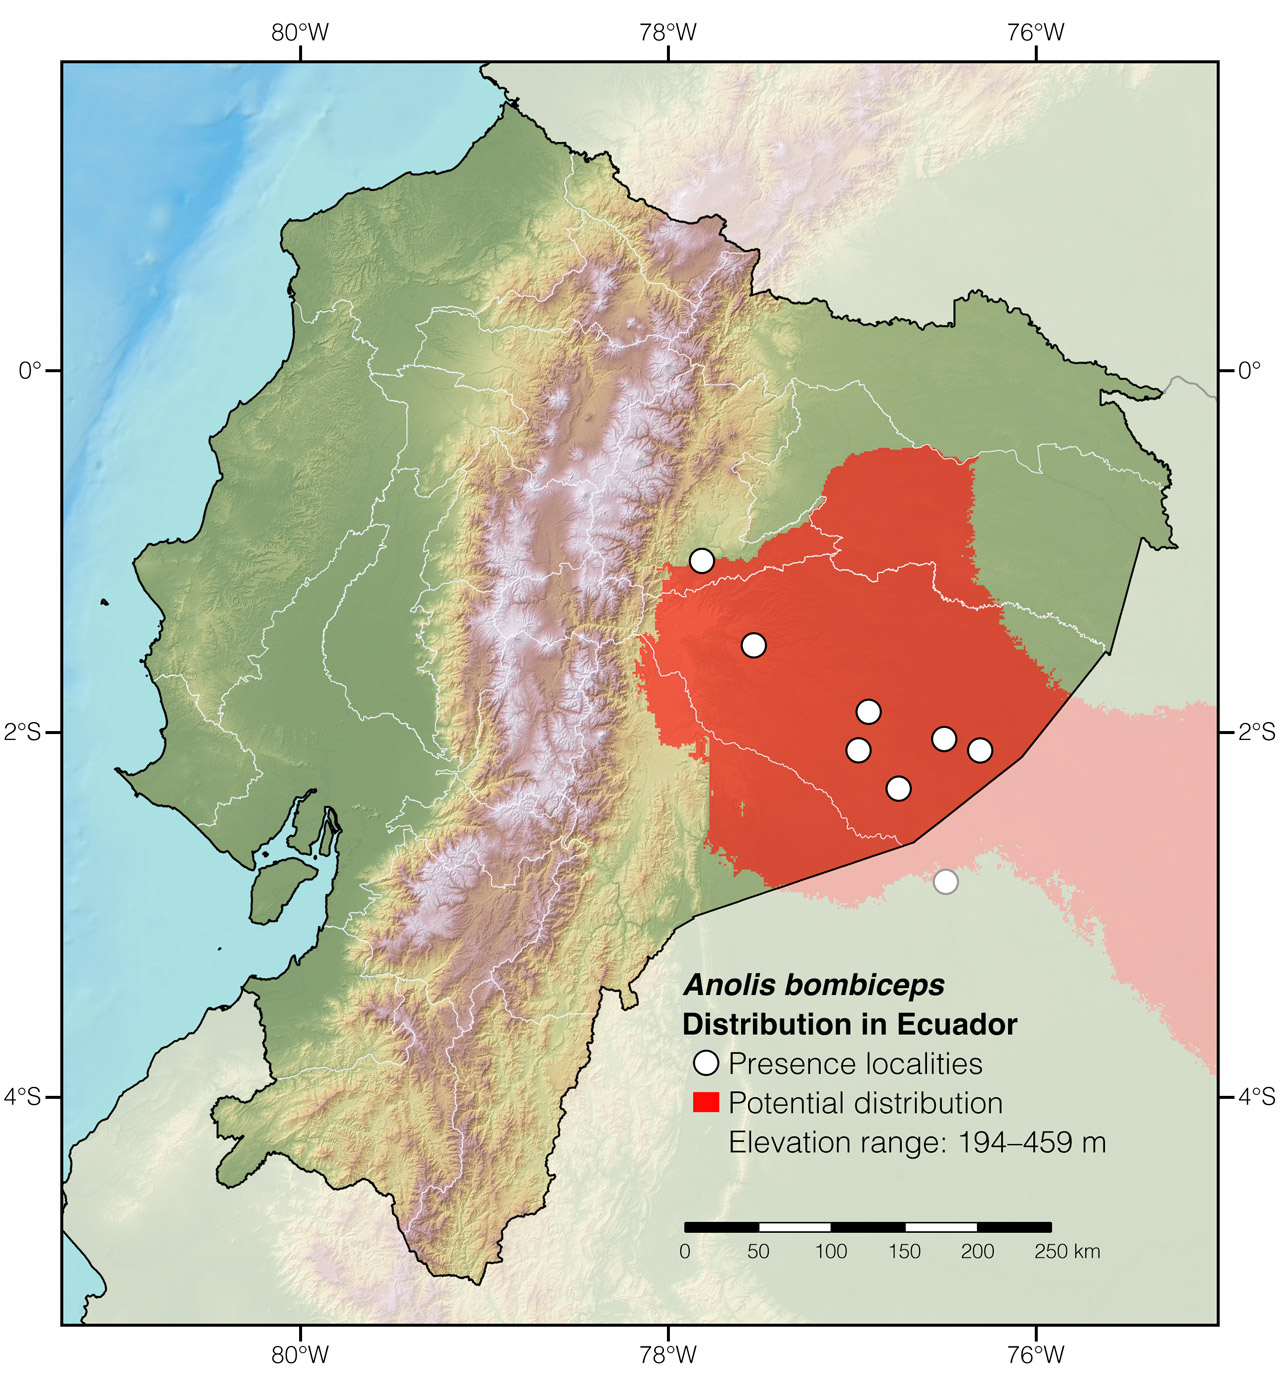 Distribution of Anolis bombiceps in Ecuador